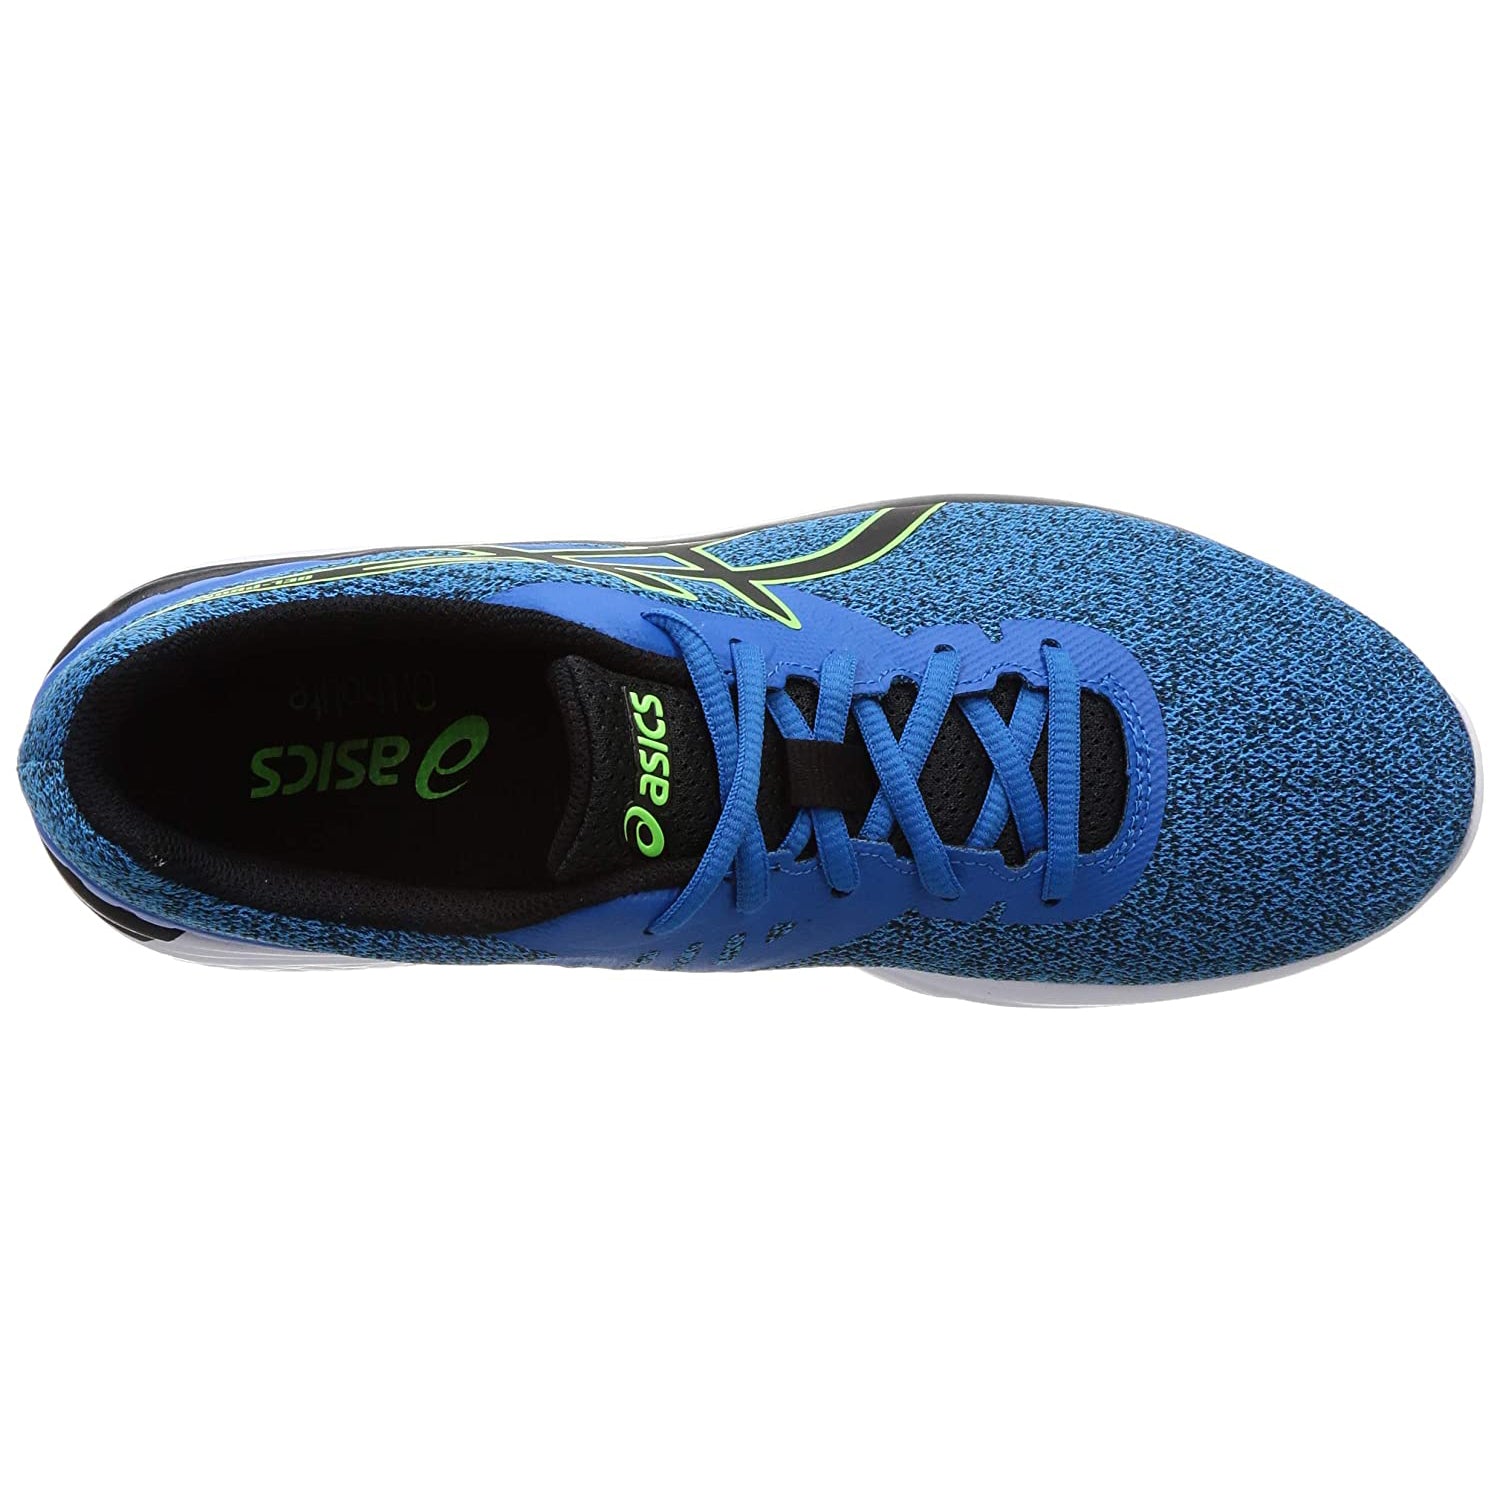 ASICS Men Gel-Promesa Mx Running Shoes - Best Price online Prokicksports.com